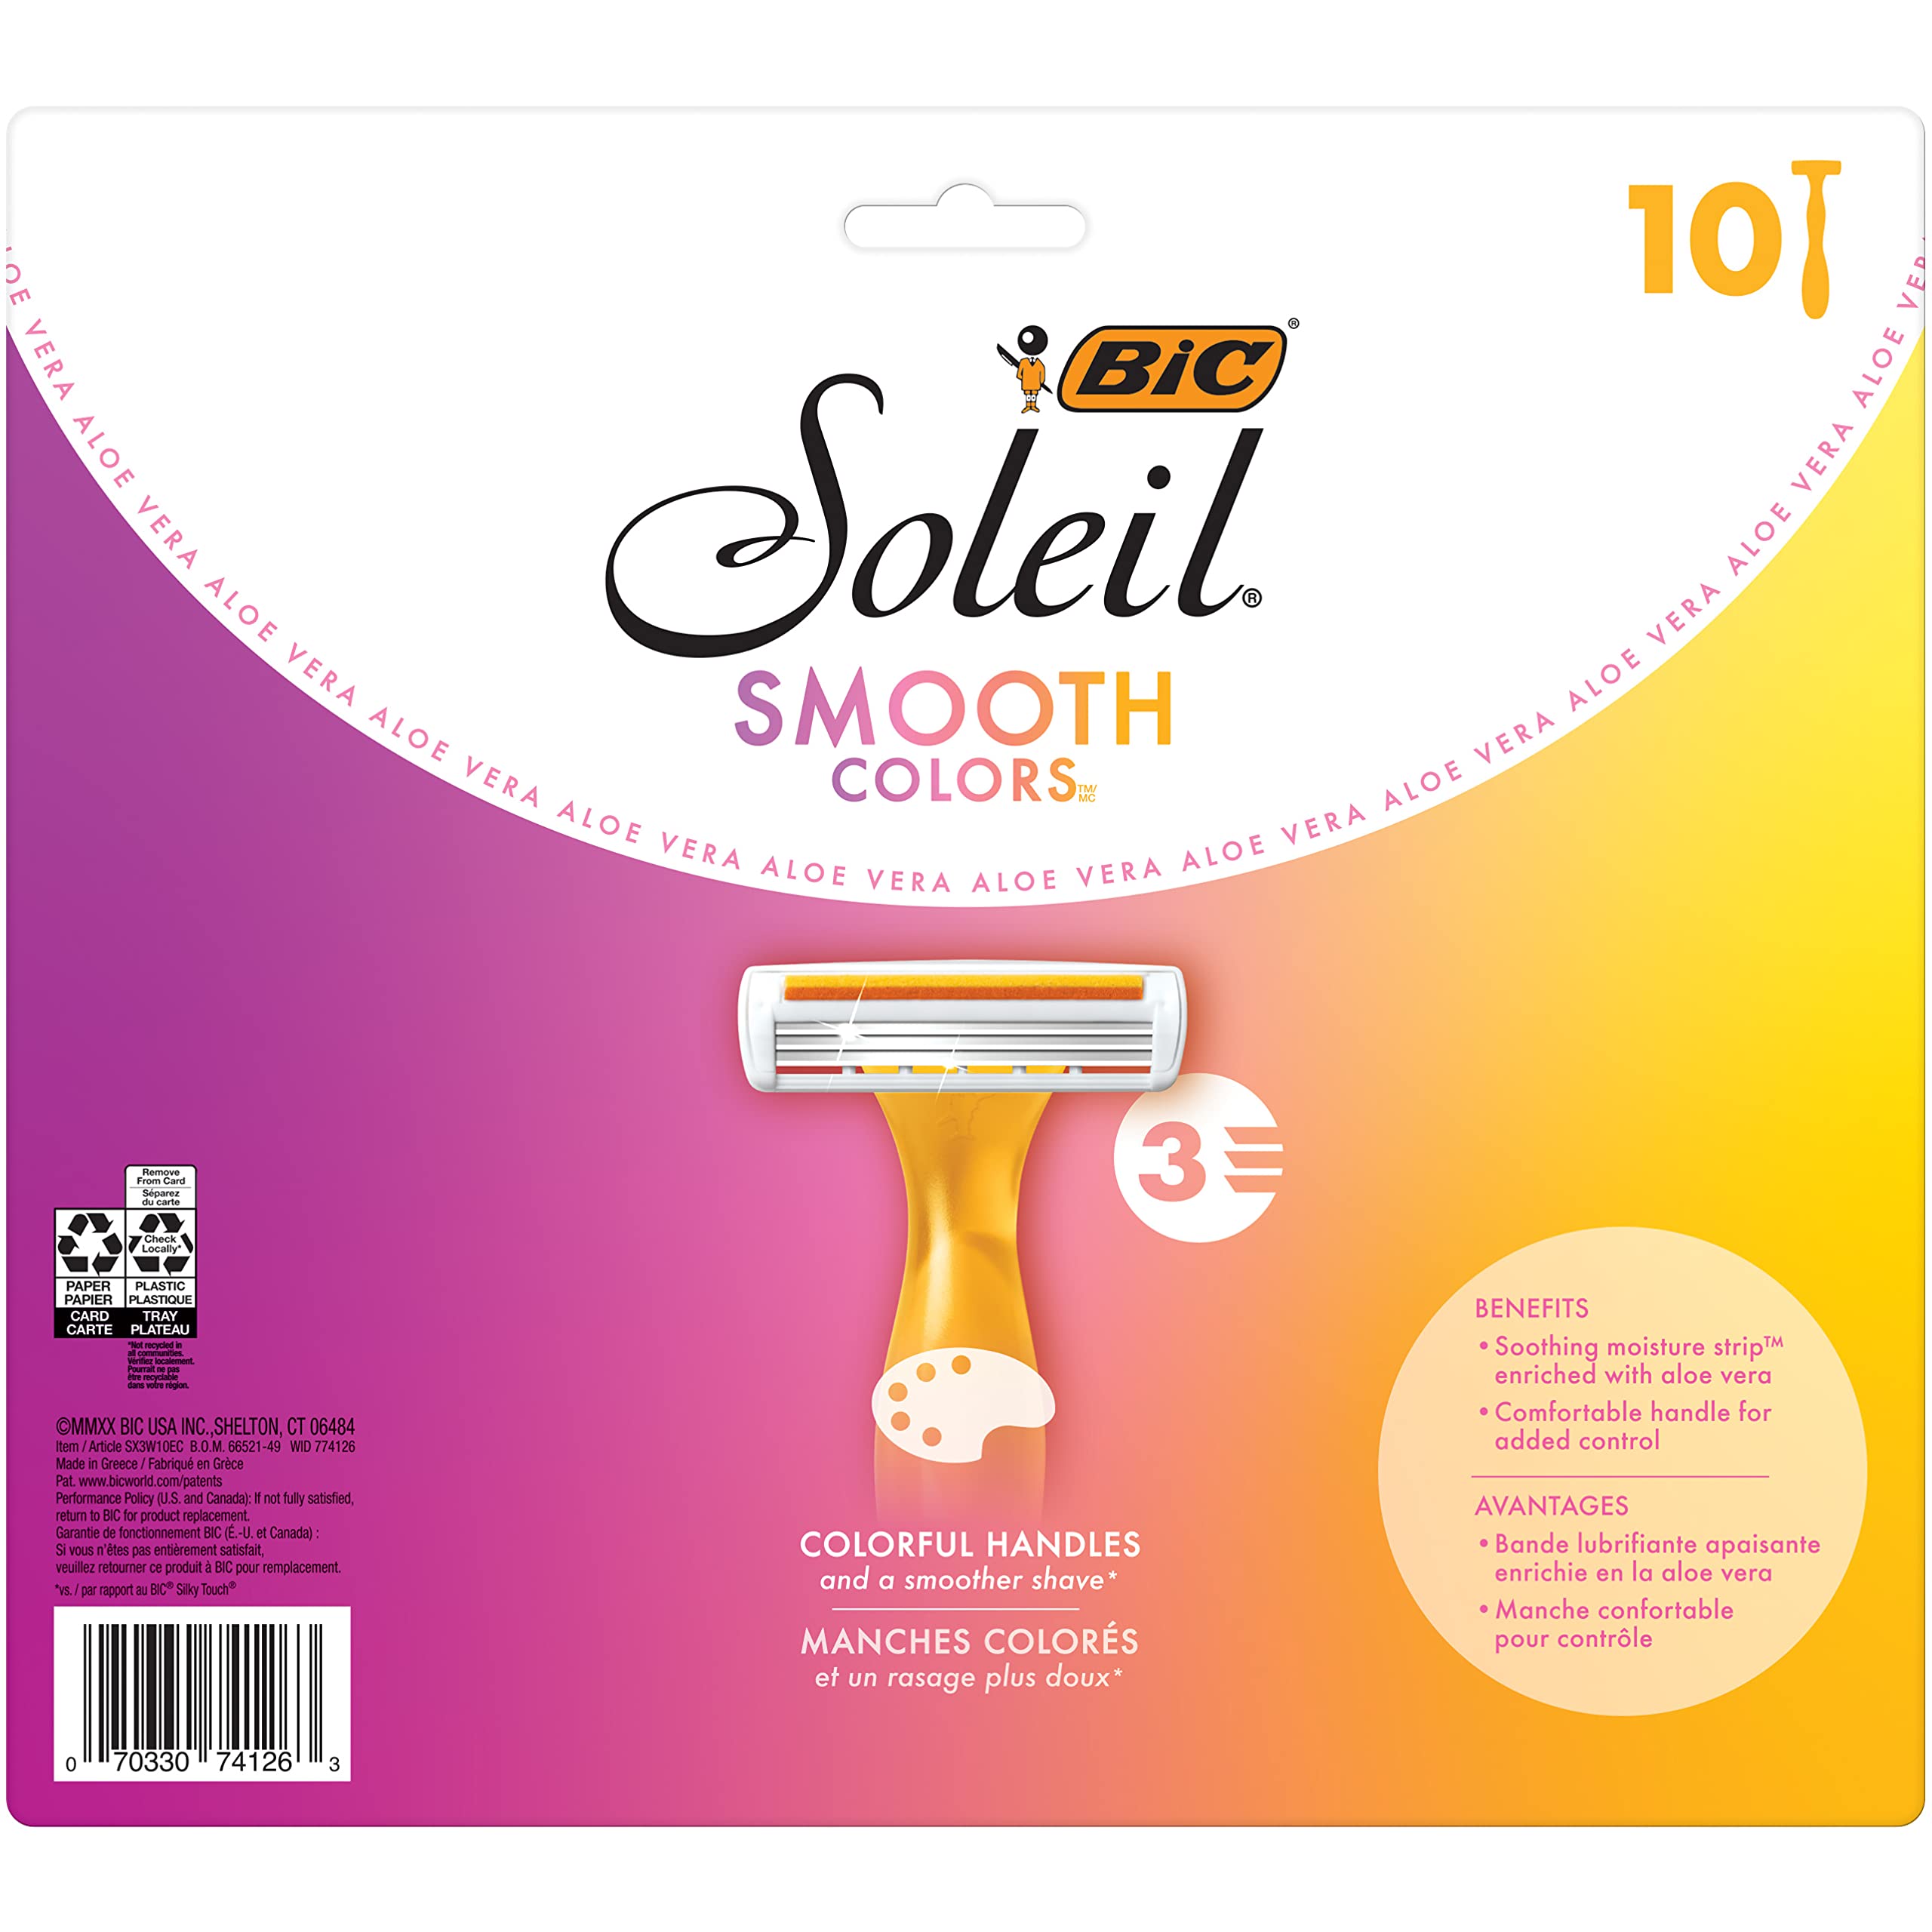 BIC Premium Shaving Razor Set with Aloe Vera and Vitamin E Lubricating Disposable Razors for Women, Strip Soleil Color, 10-Count, 3 Blades